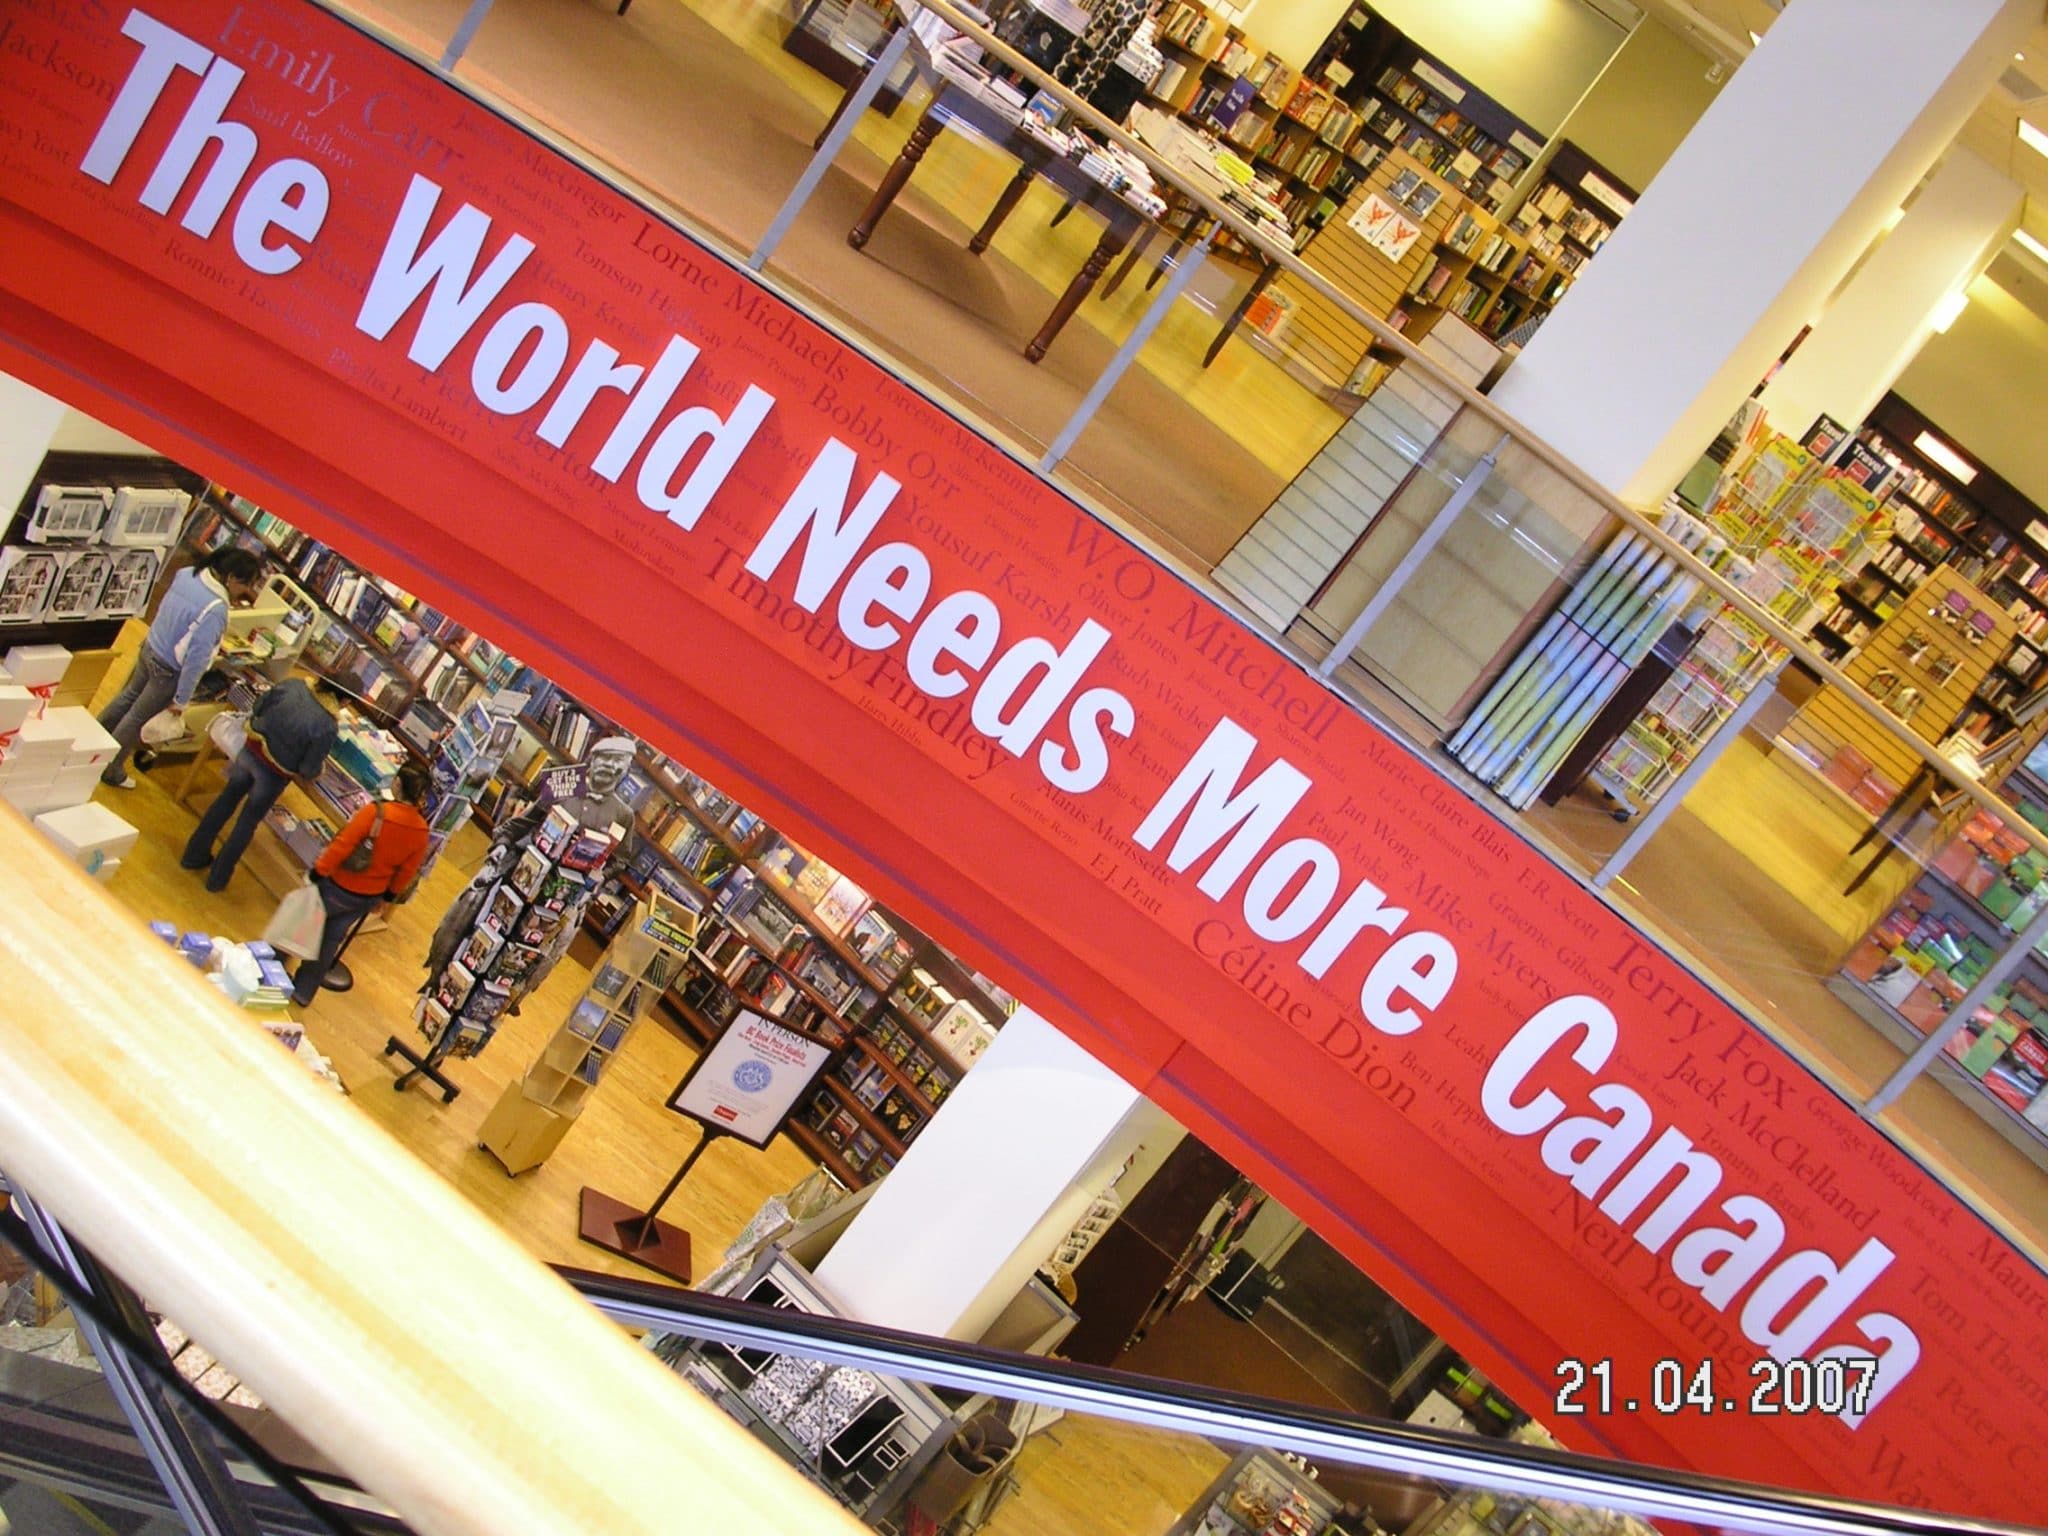 The World needs more Kanada